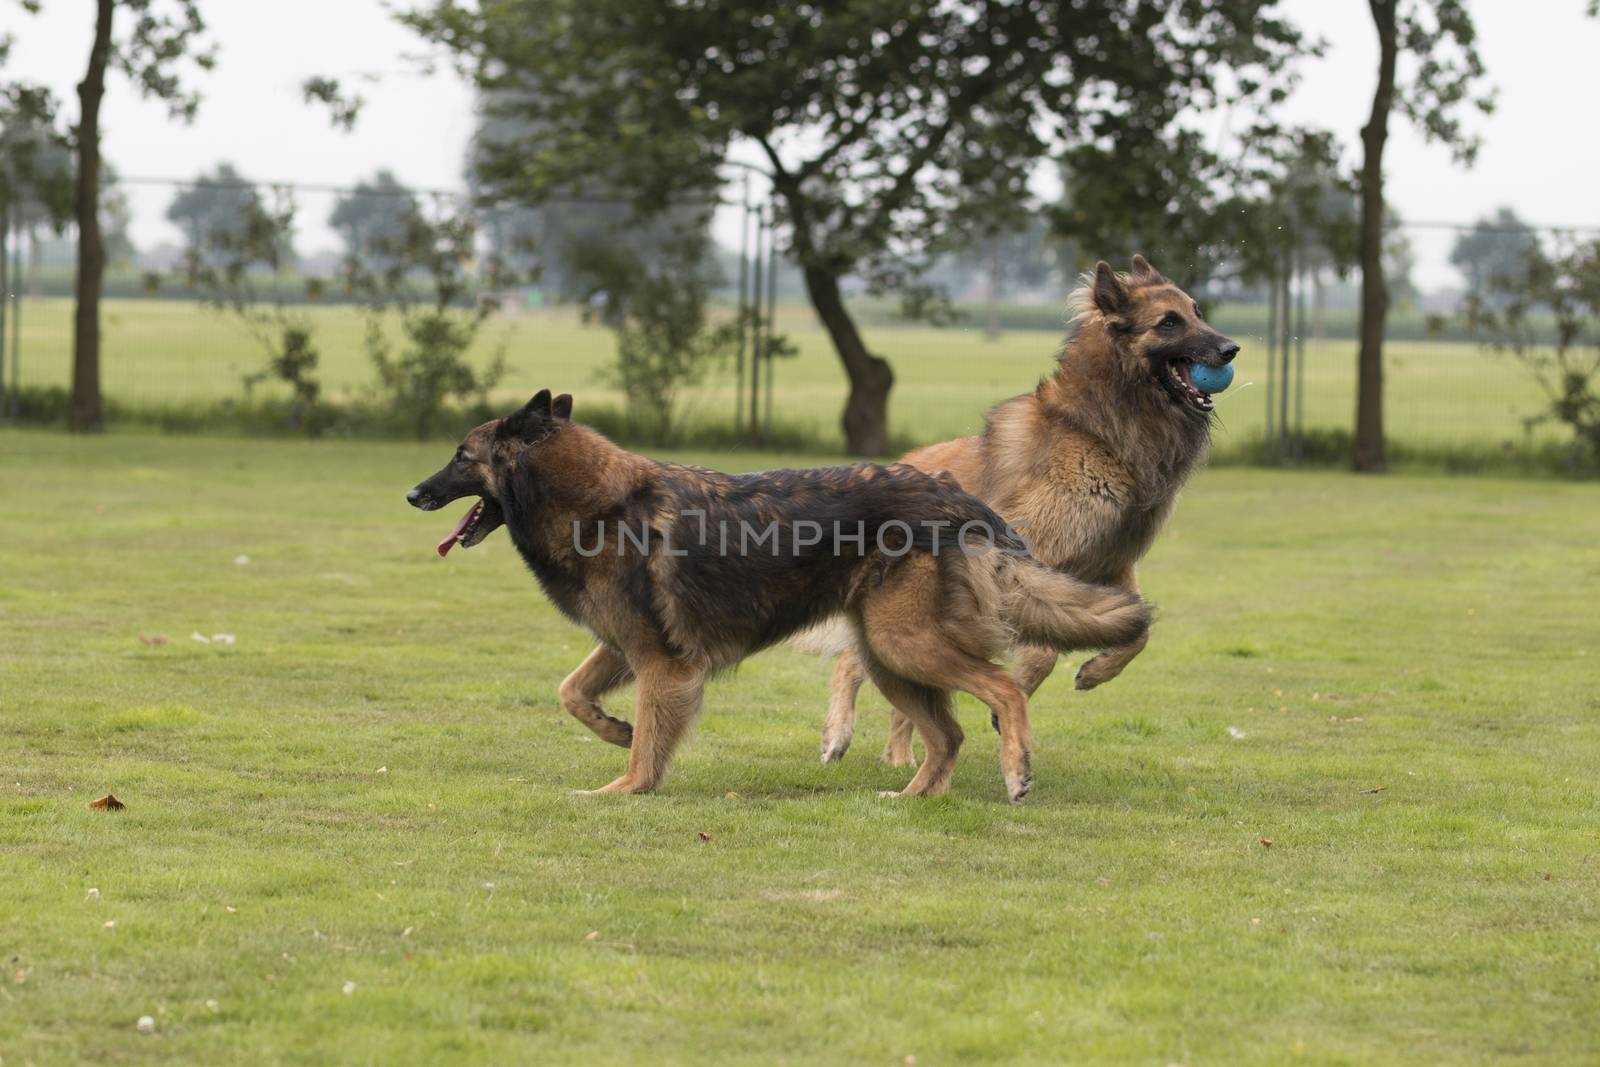 Two dogs, Belgian Shepherd Tervuren, playing in grass